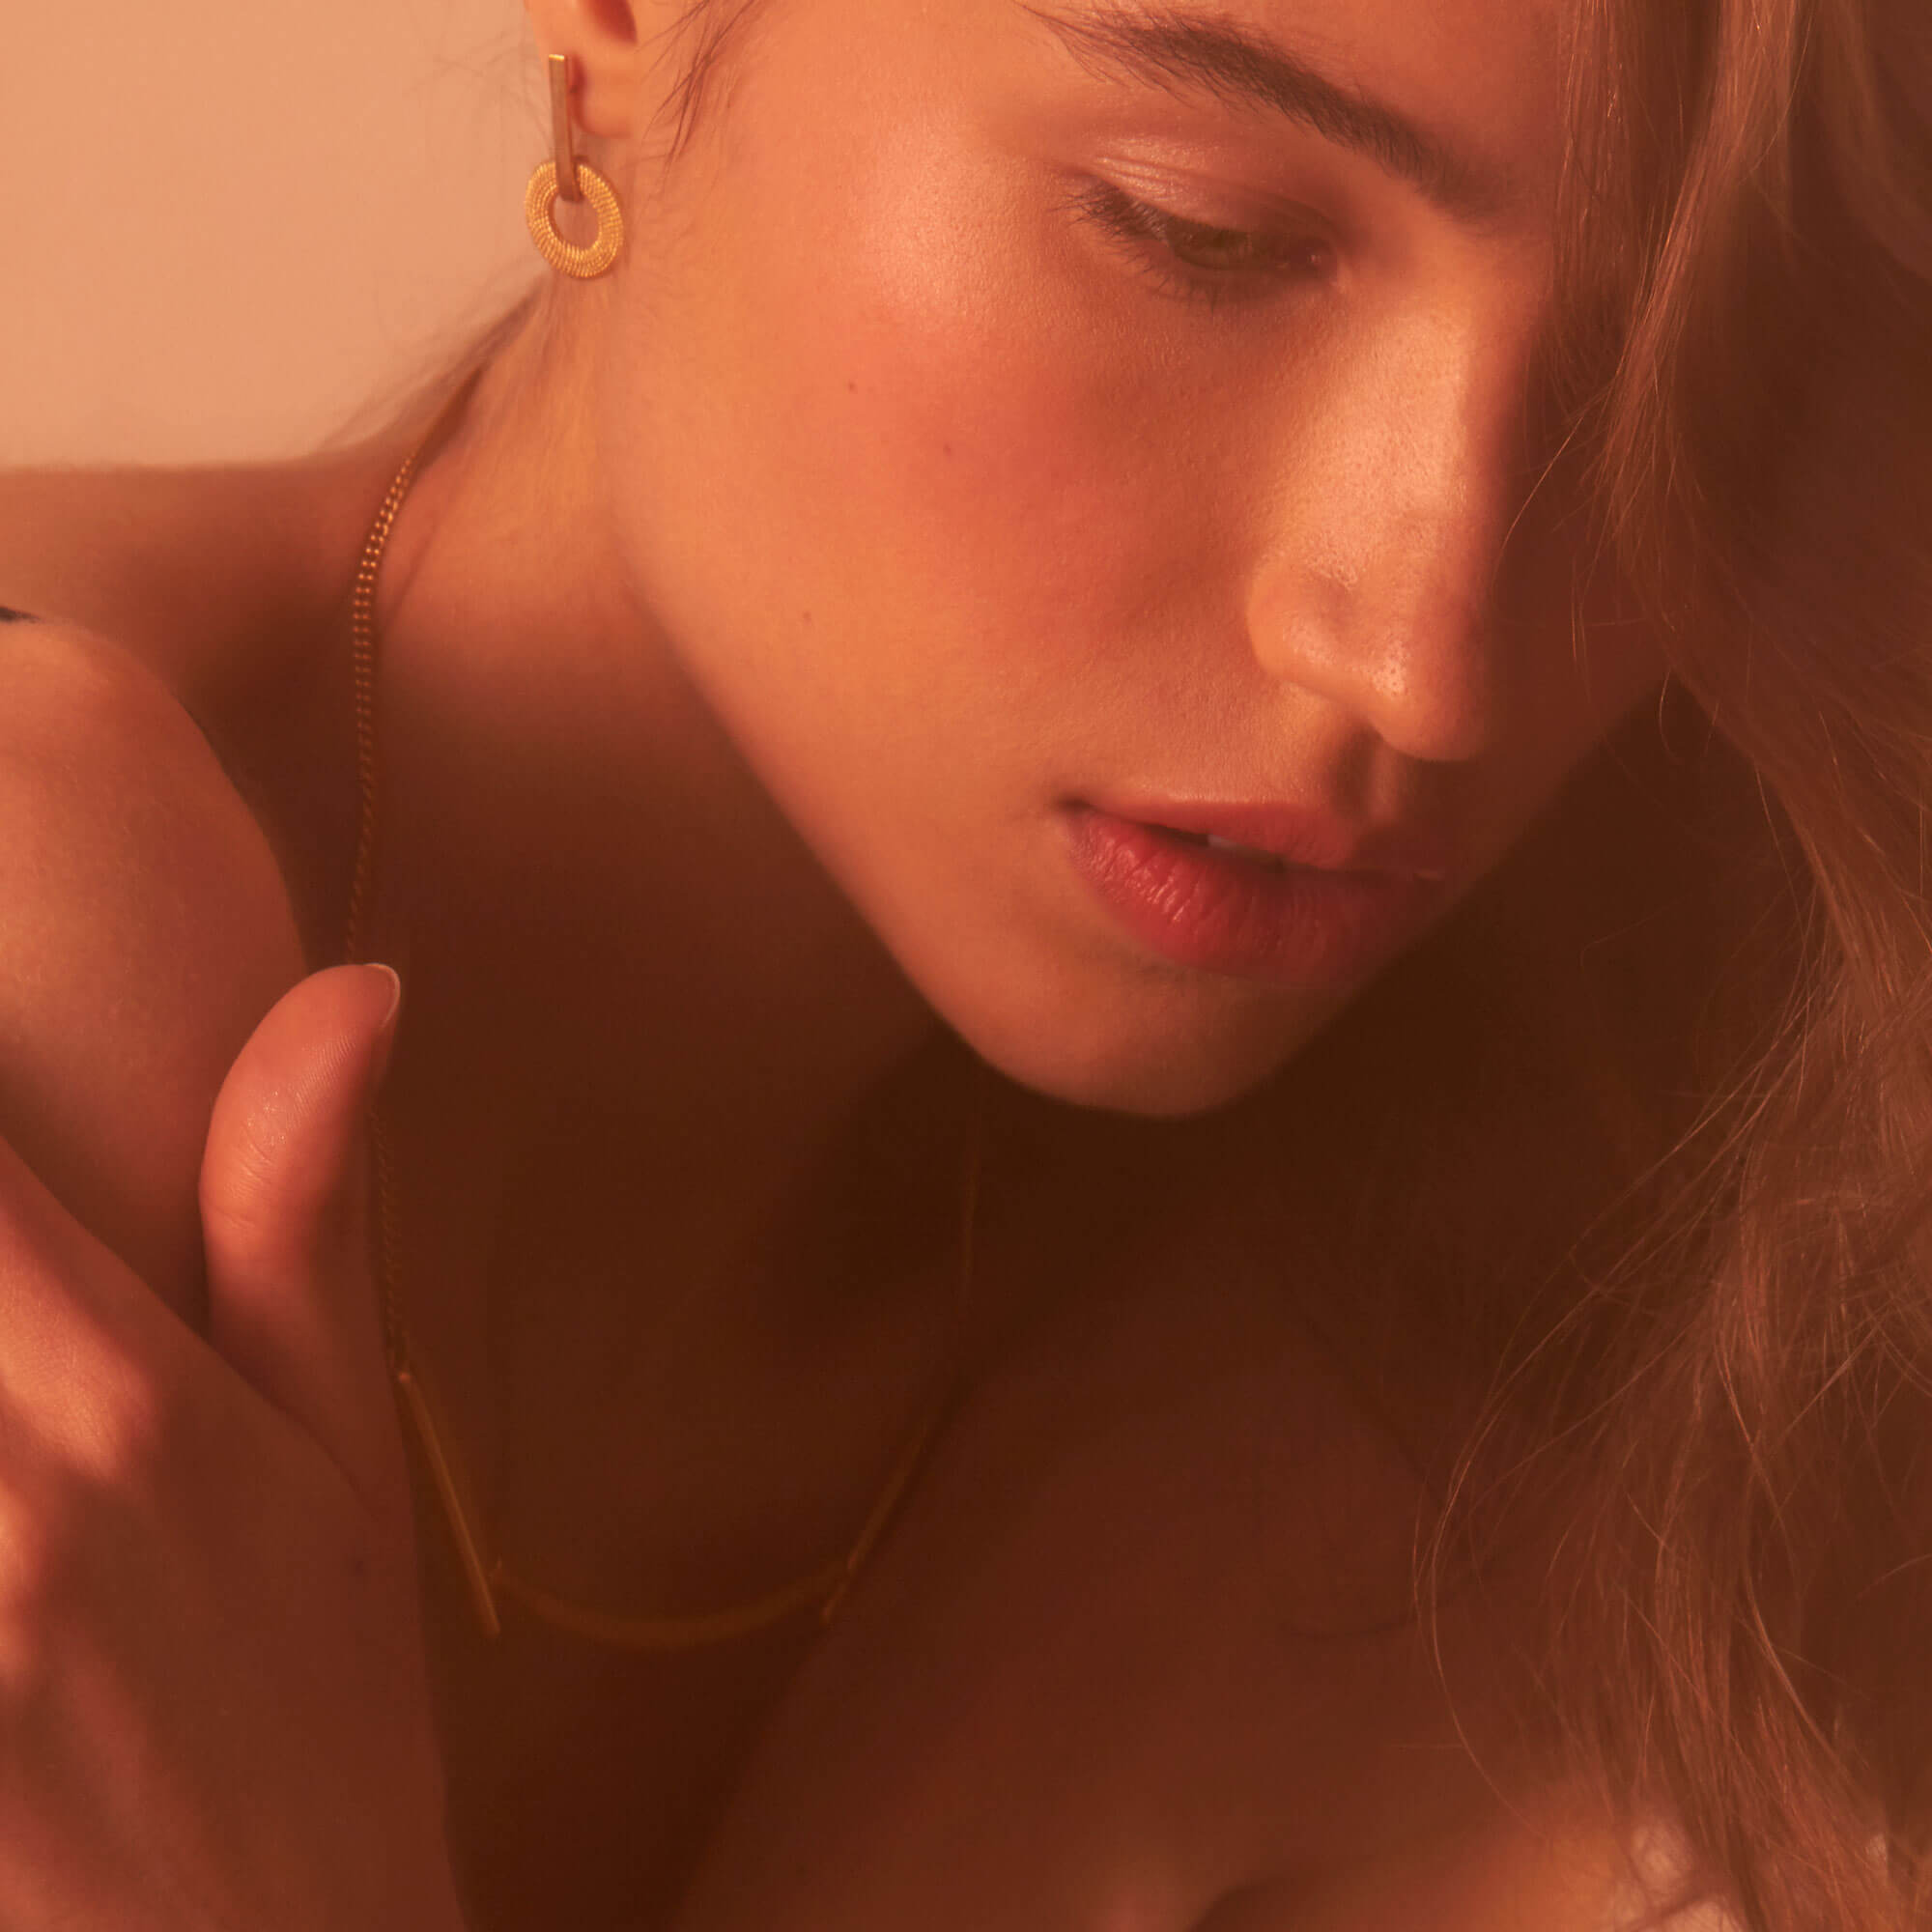 A model wearing a textured gold drop earrings